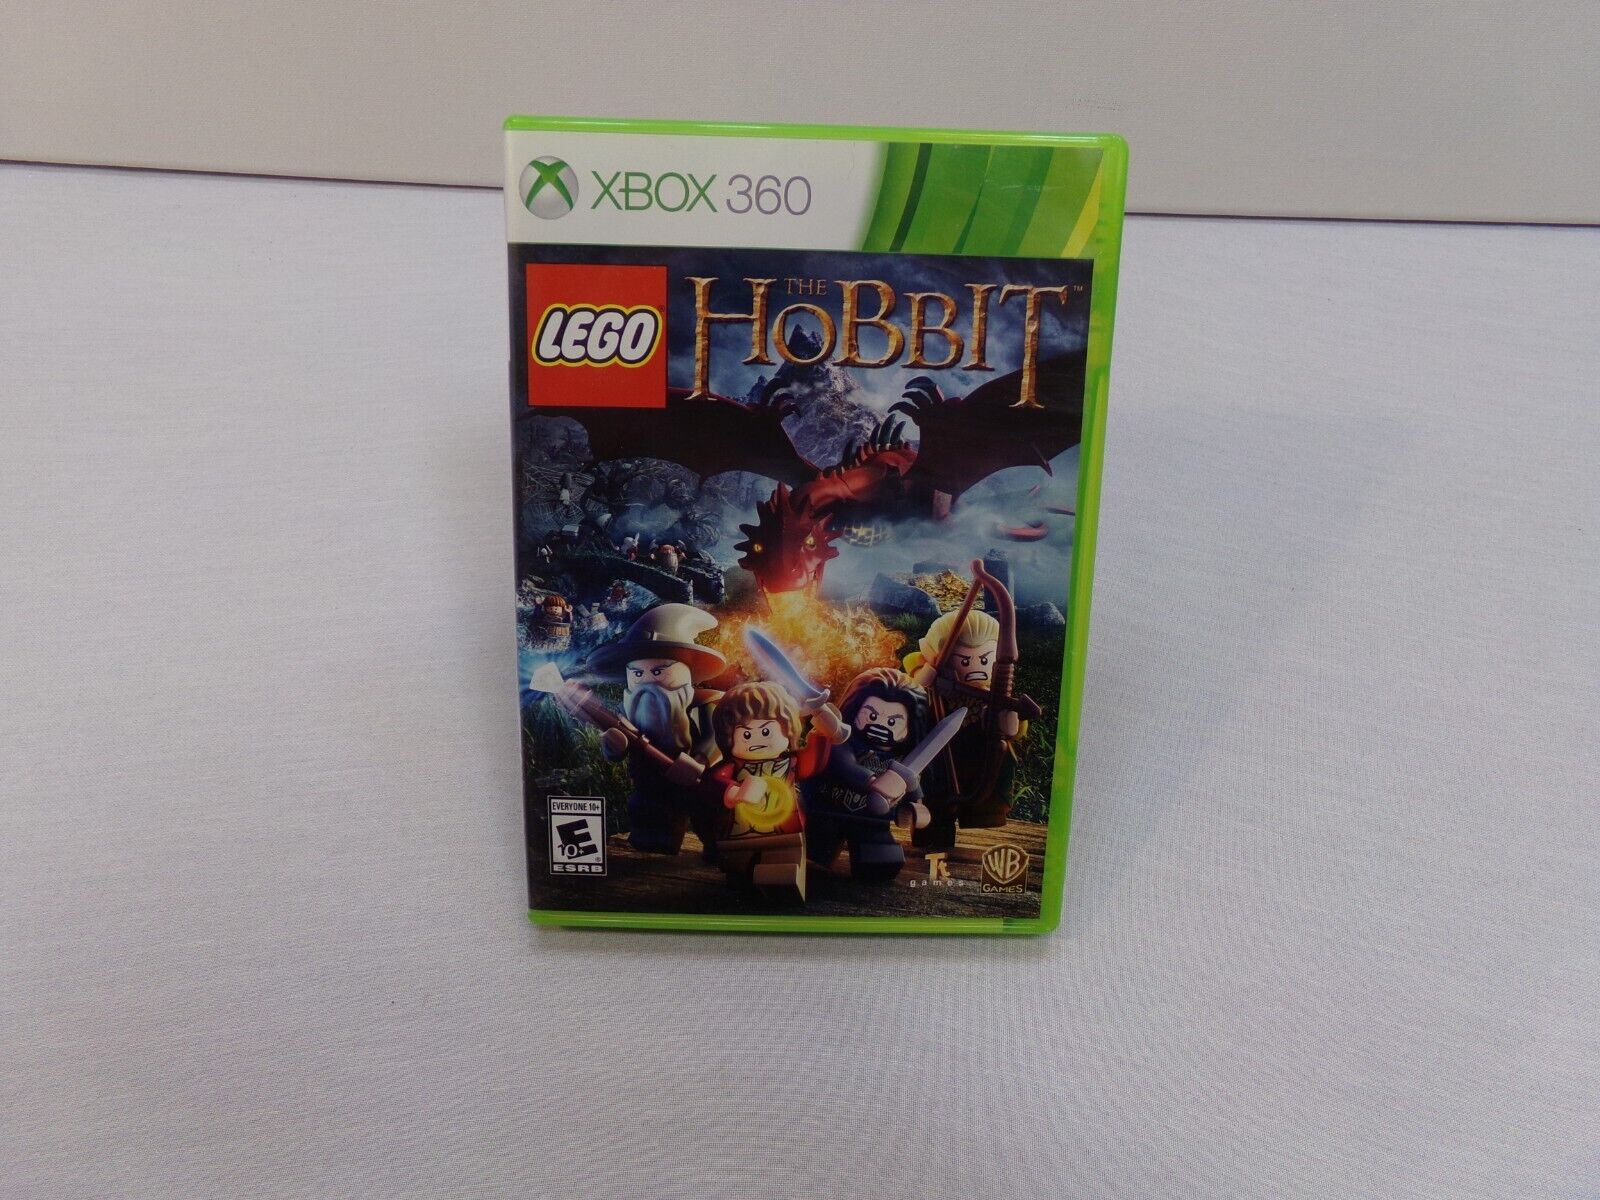 Verlichting Dor Oost Lego The Hobbit - Xbox 360 Game - Complete - Excellent Disc + | eBay